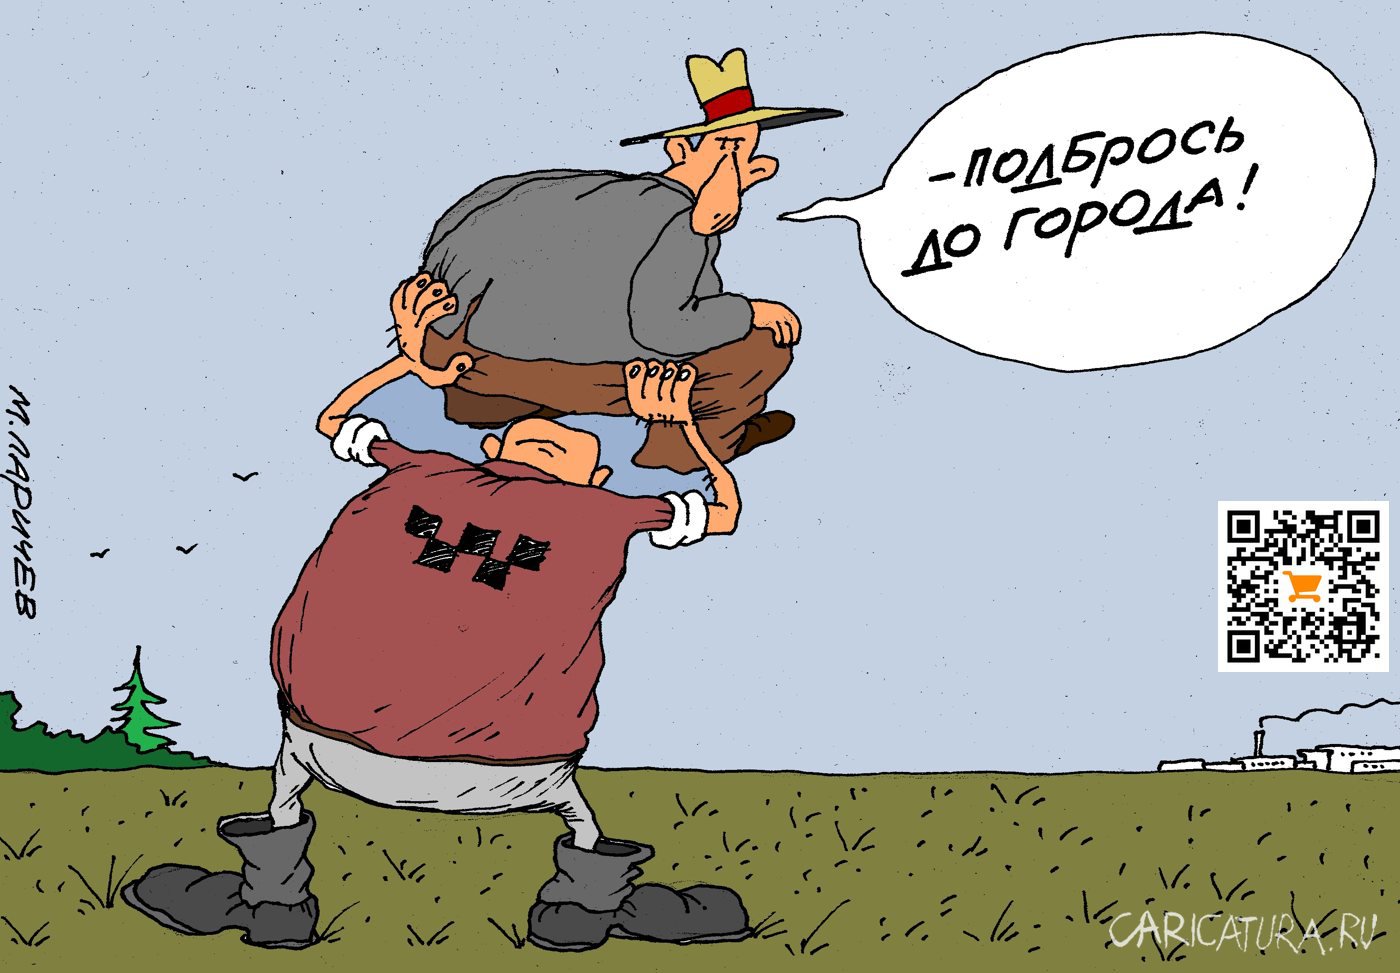 Карикатура "До города", Михаил Ларичев